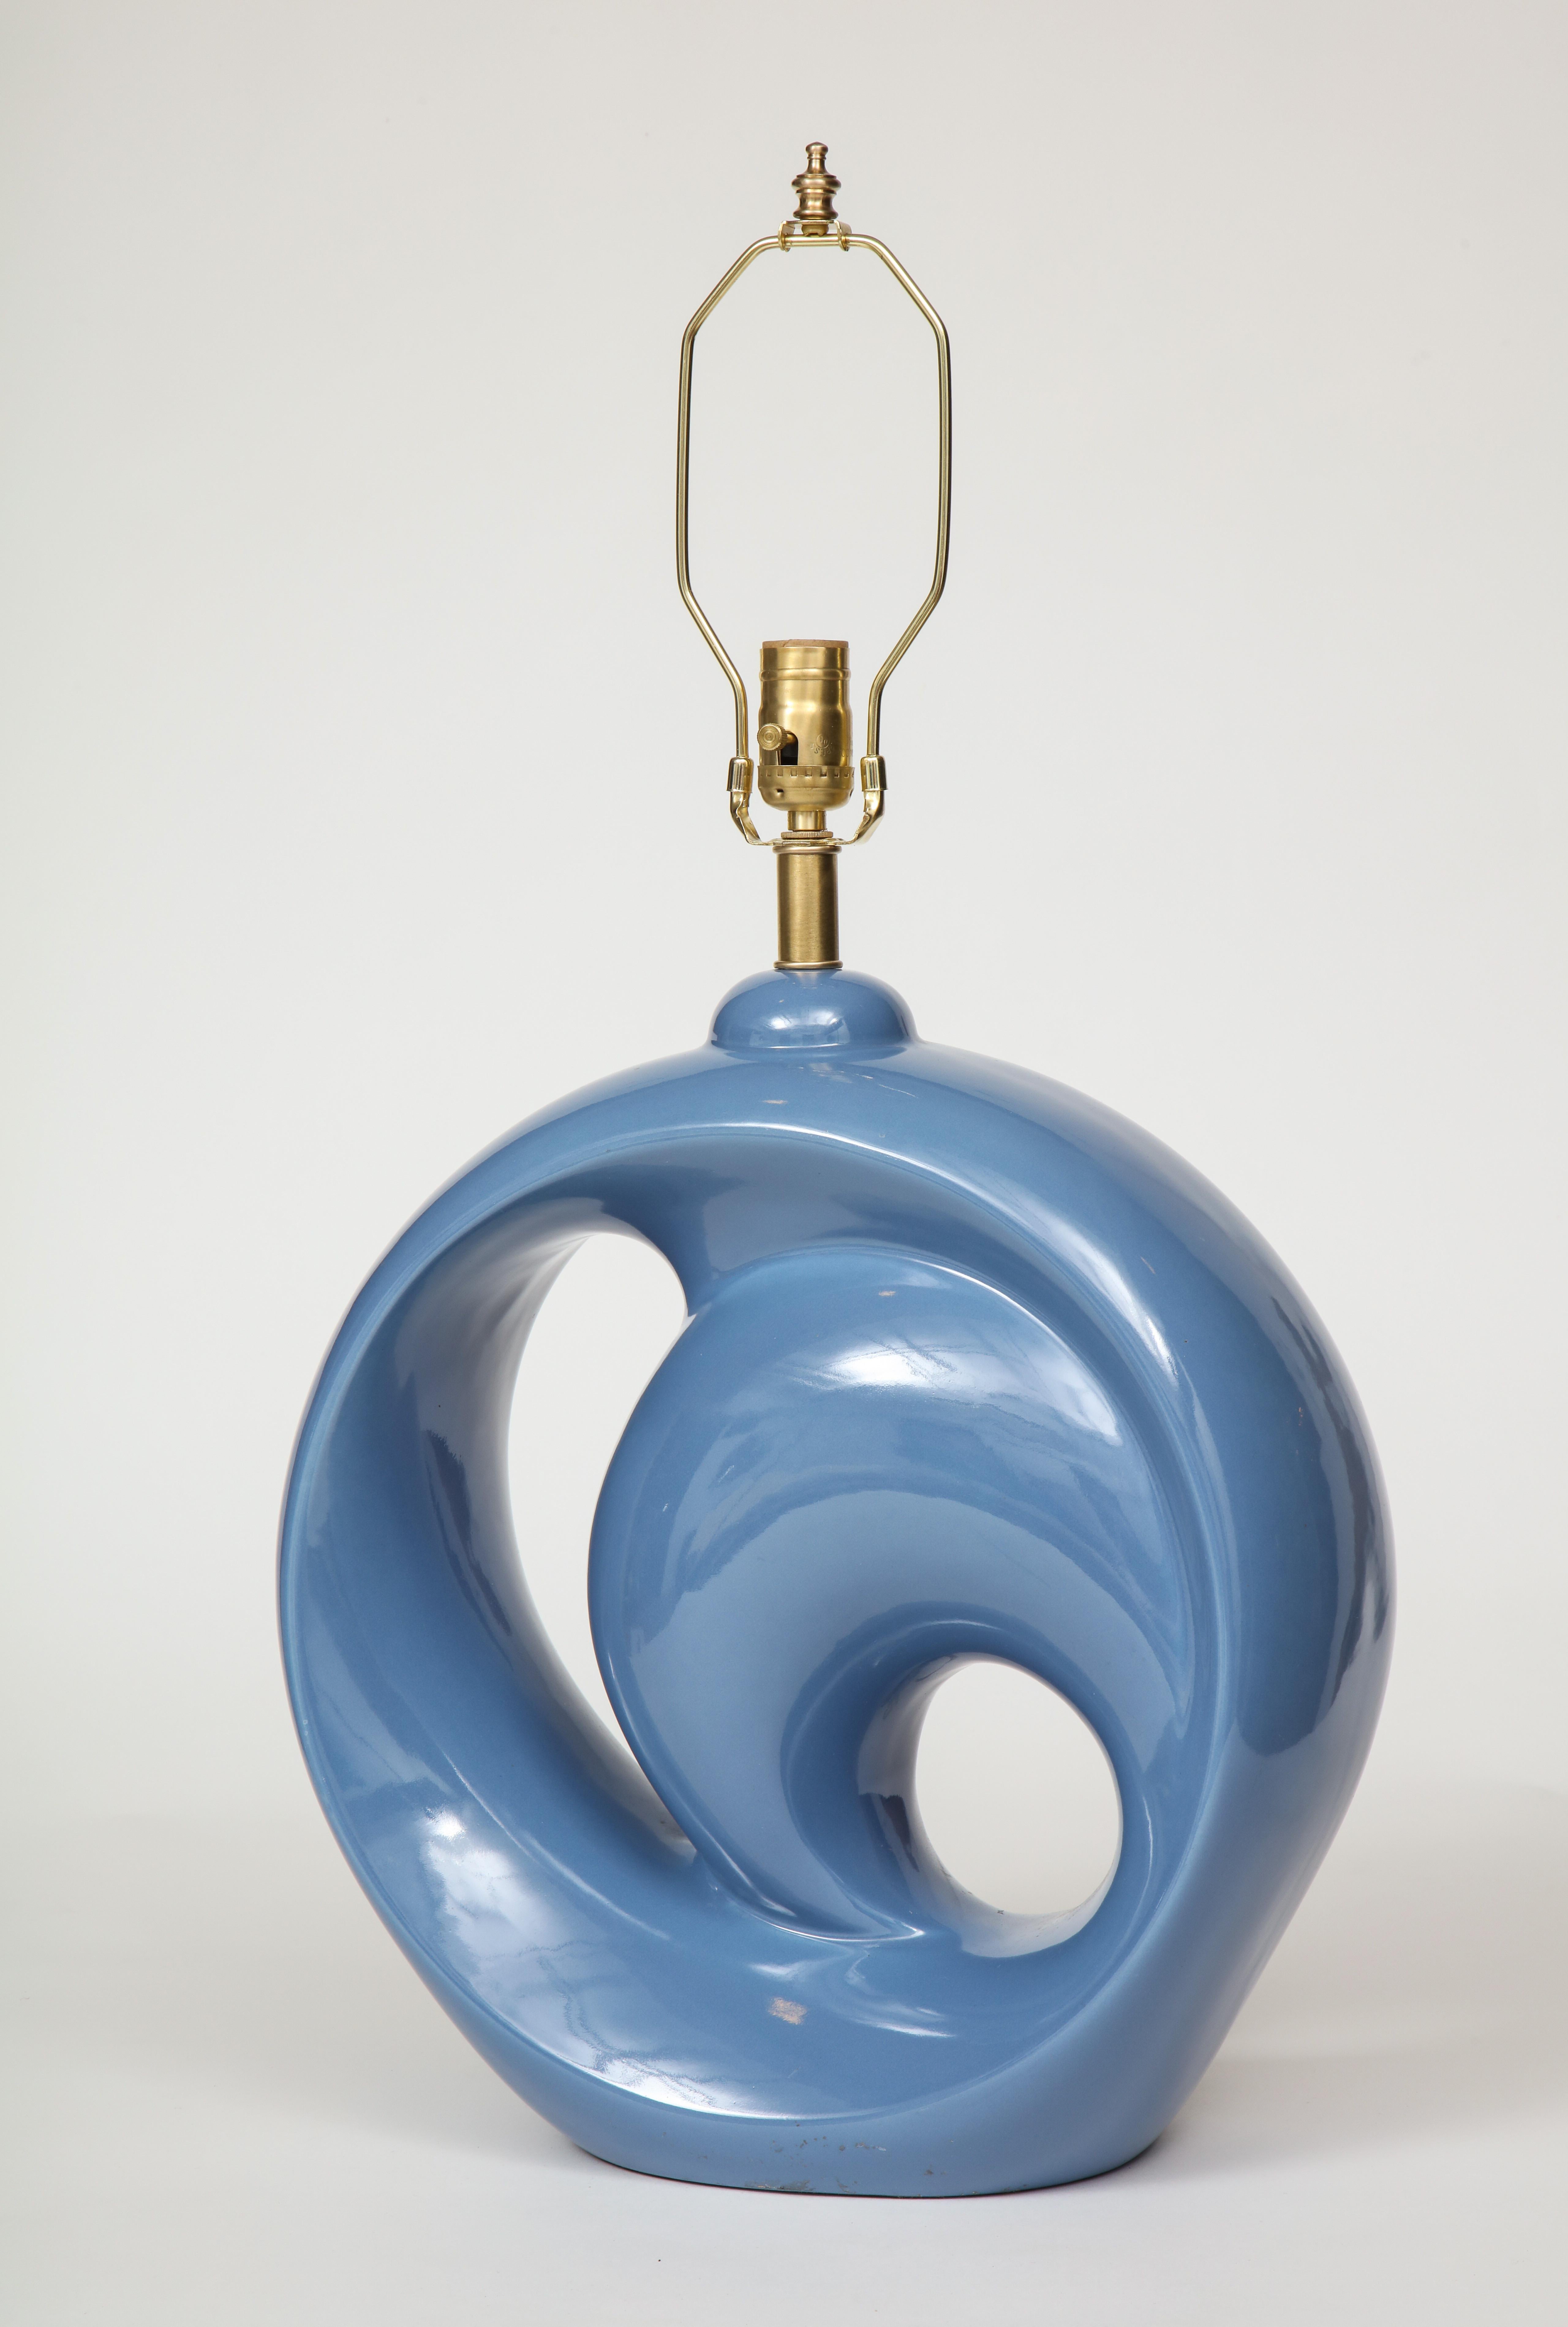 American Midcentury Cornflower Blue Porcelain Lamps For Sale